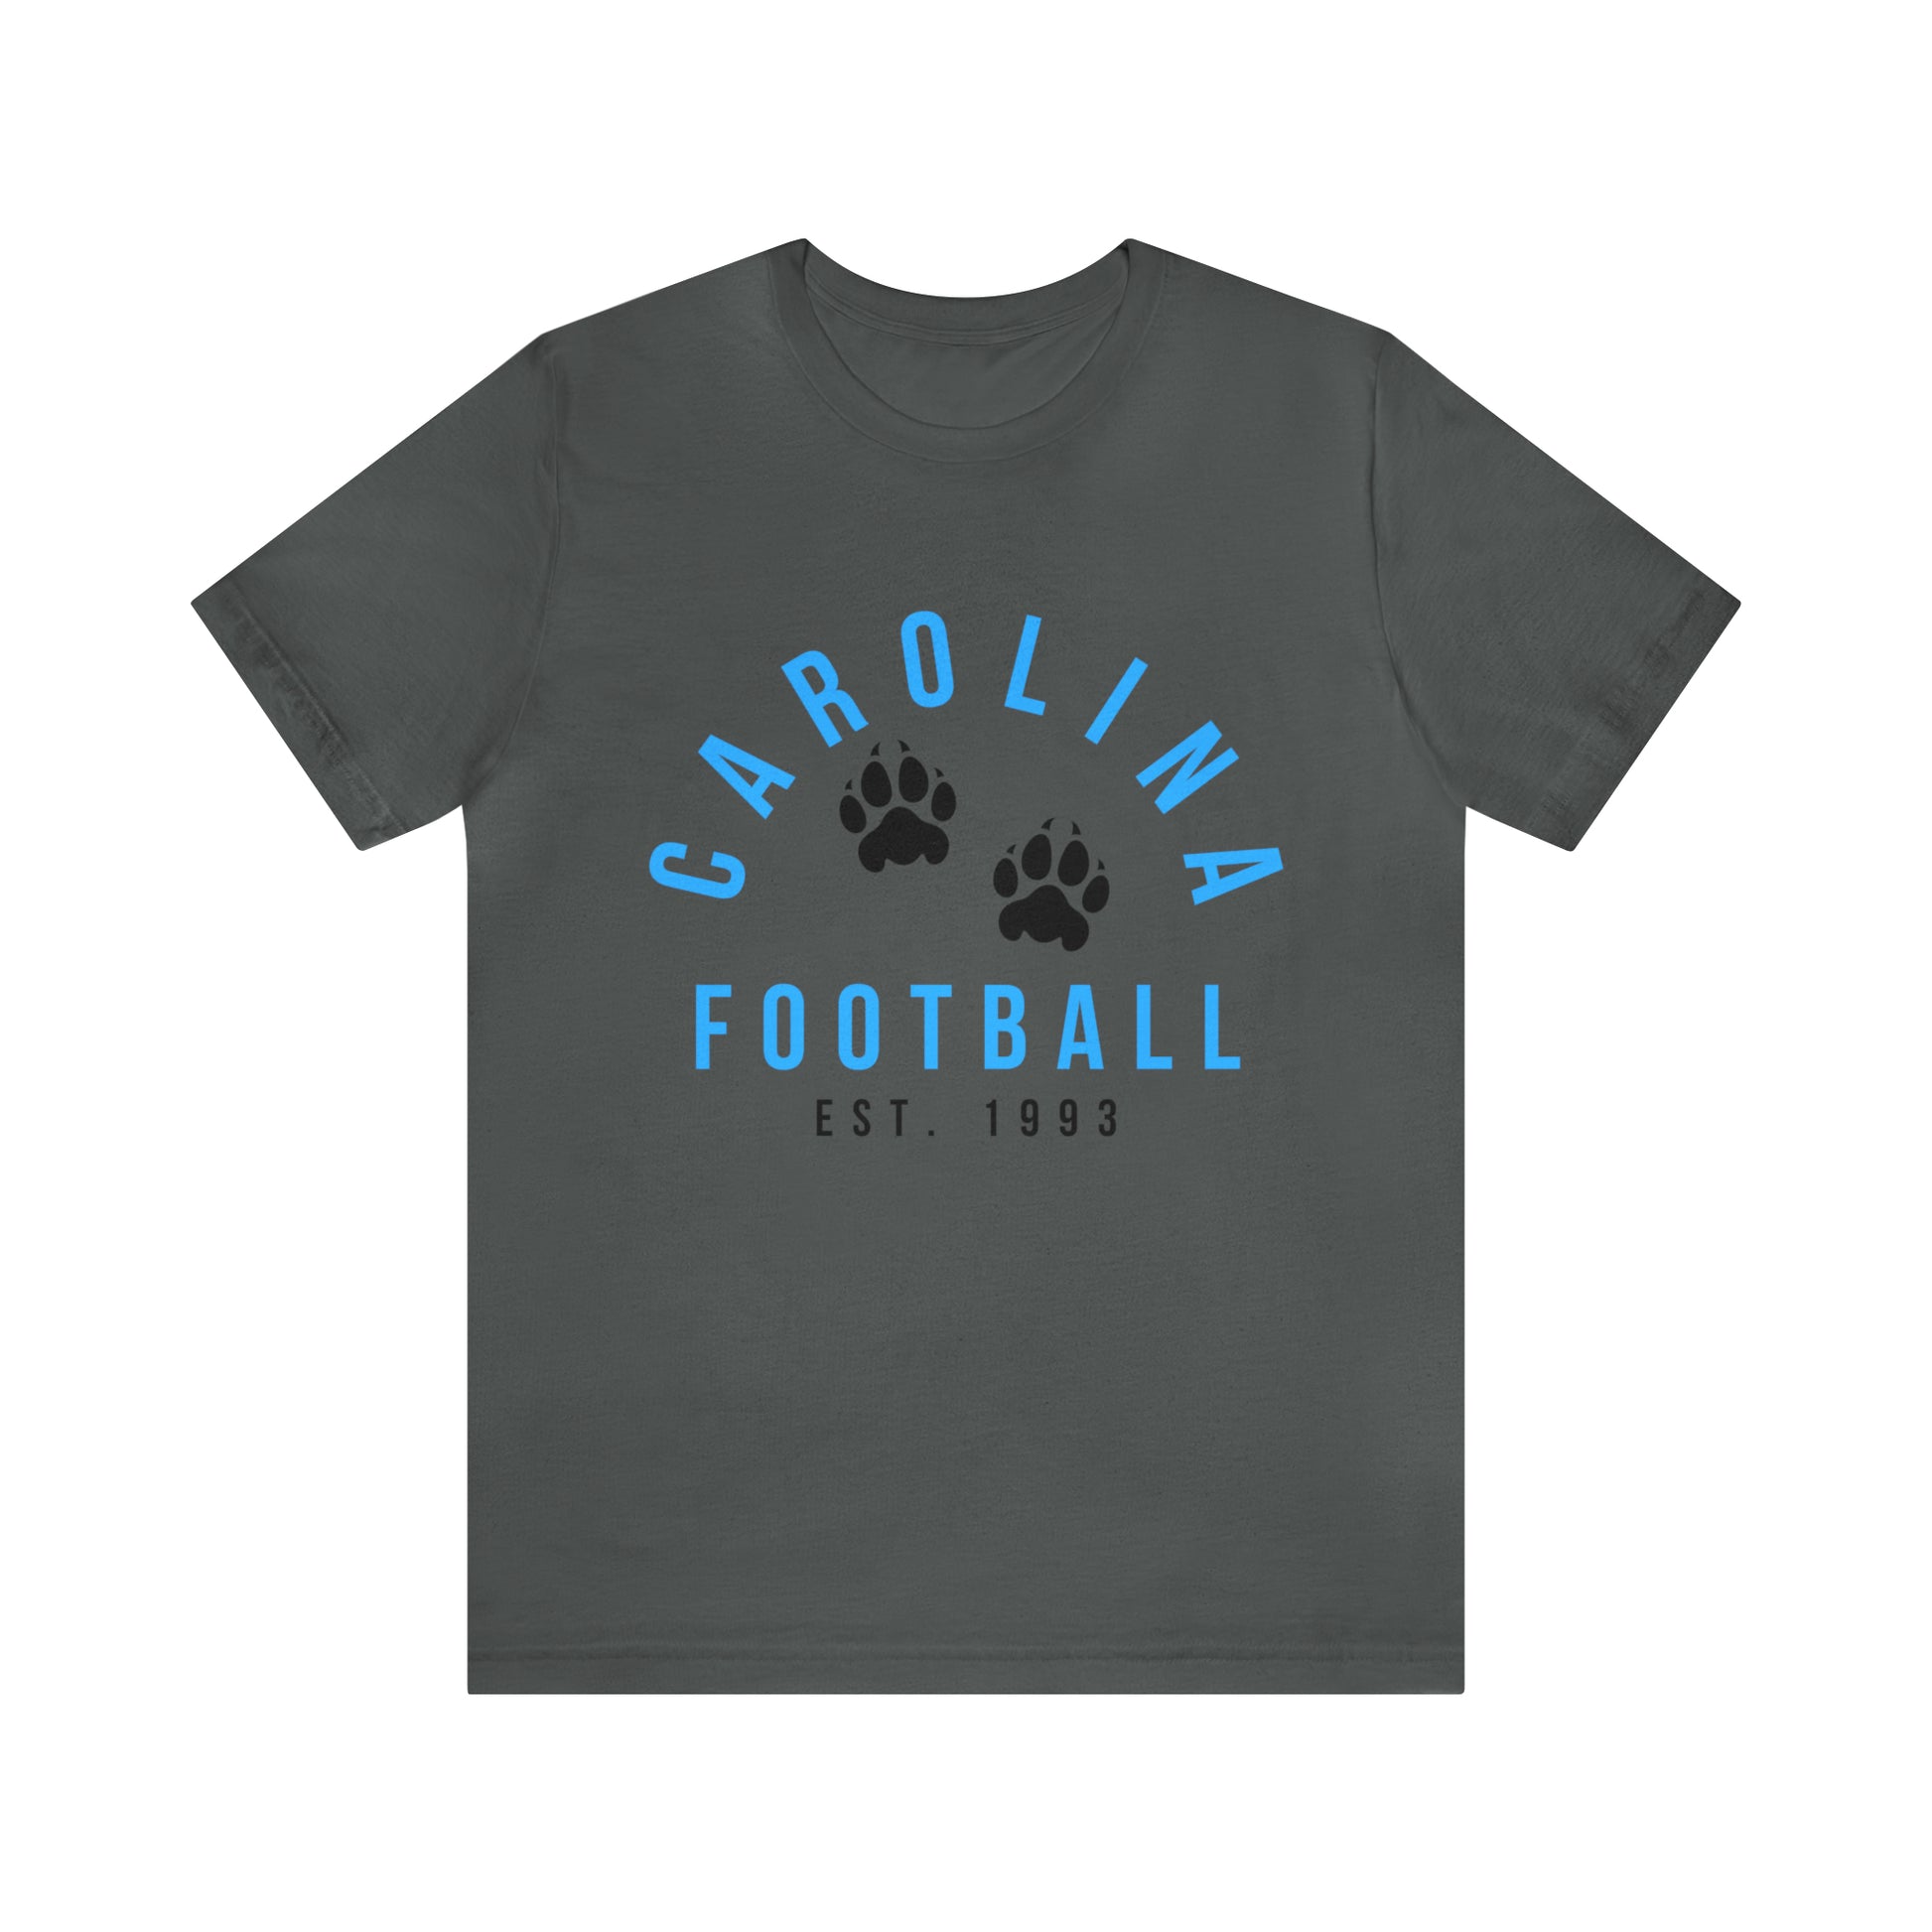 Vintage Carolina Panthers T-Shirt - Retro Short Sleeve Tee NFL Football Oversized Apparel - Vintage Men's and Women's - Design 4 gray